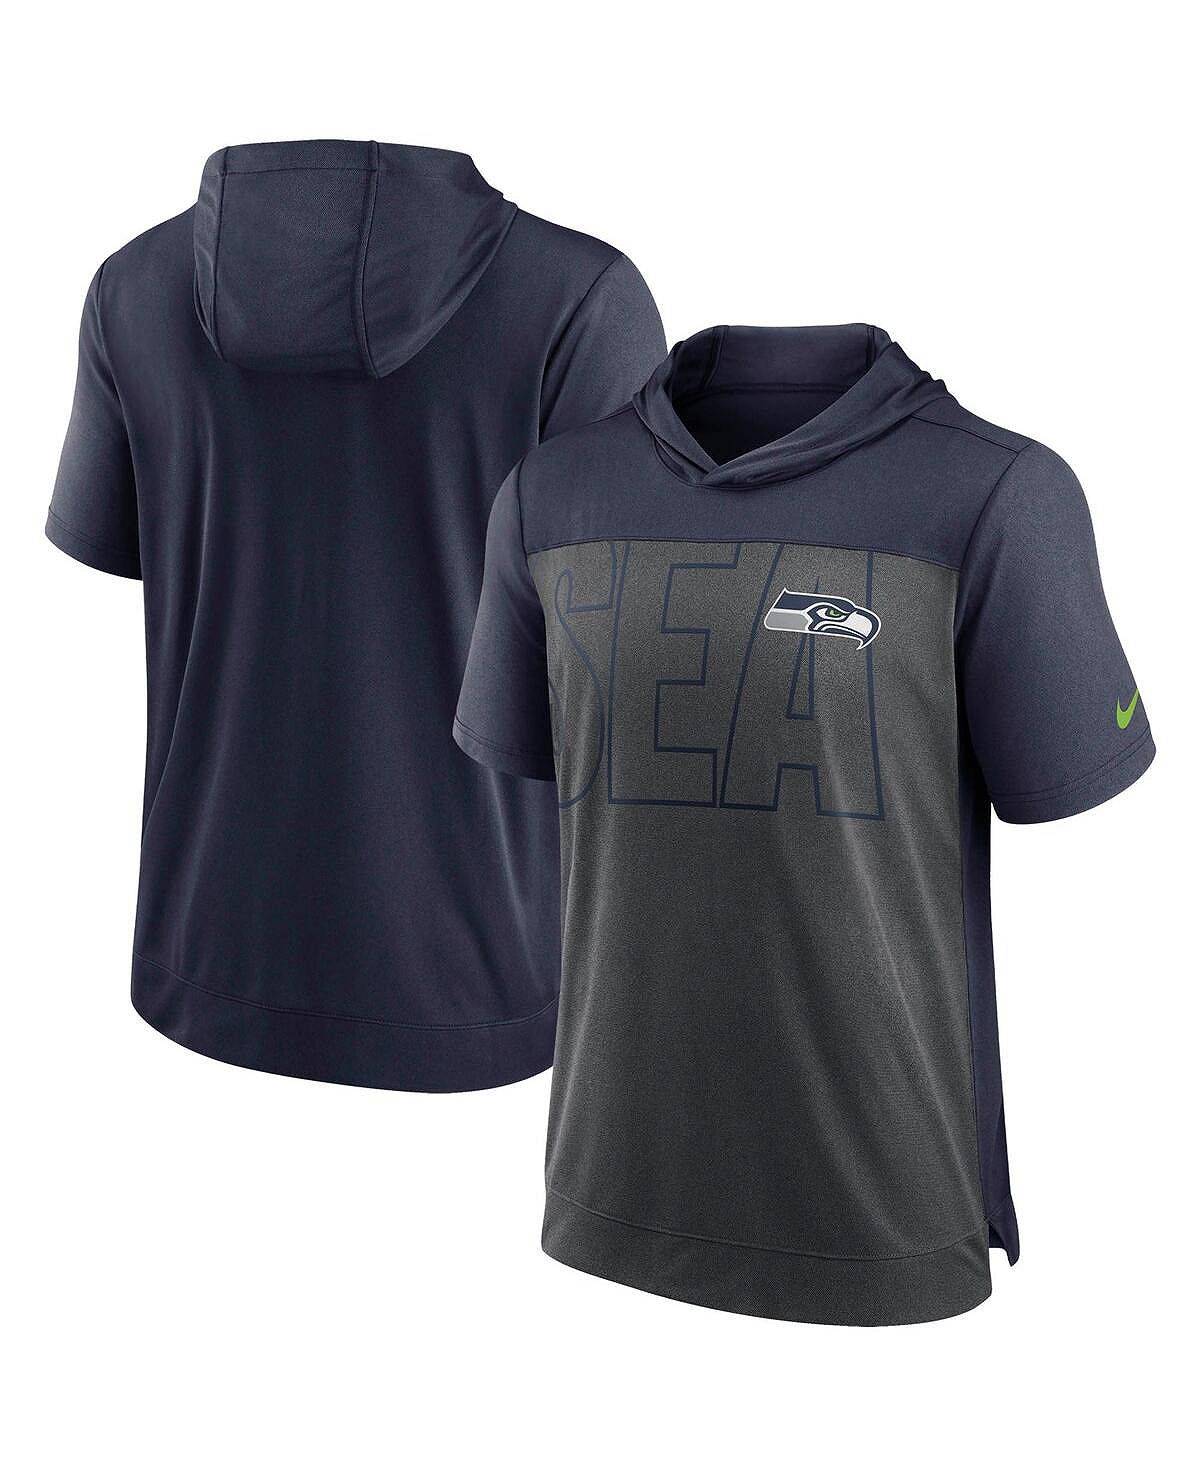 Мужская футболка с капюшоном цвета темно-серого меланжевого цвета college navy seattle seahawks performance hoodie Nike, мульти цена и фото